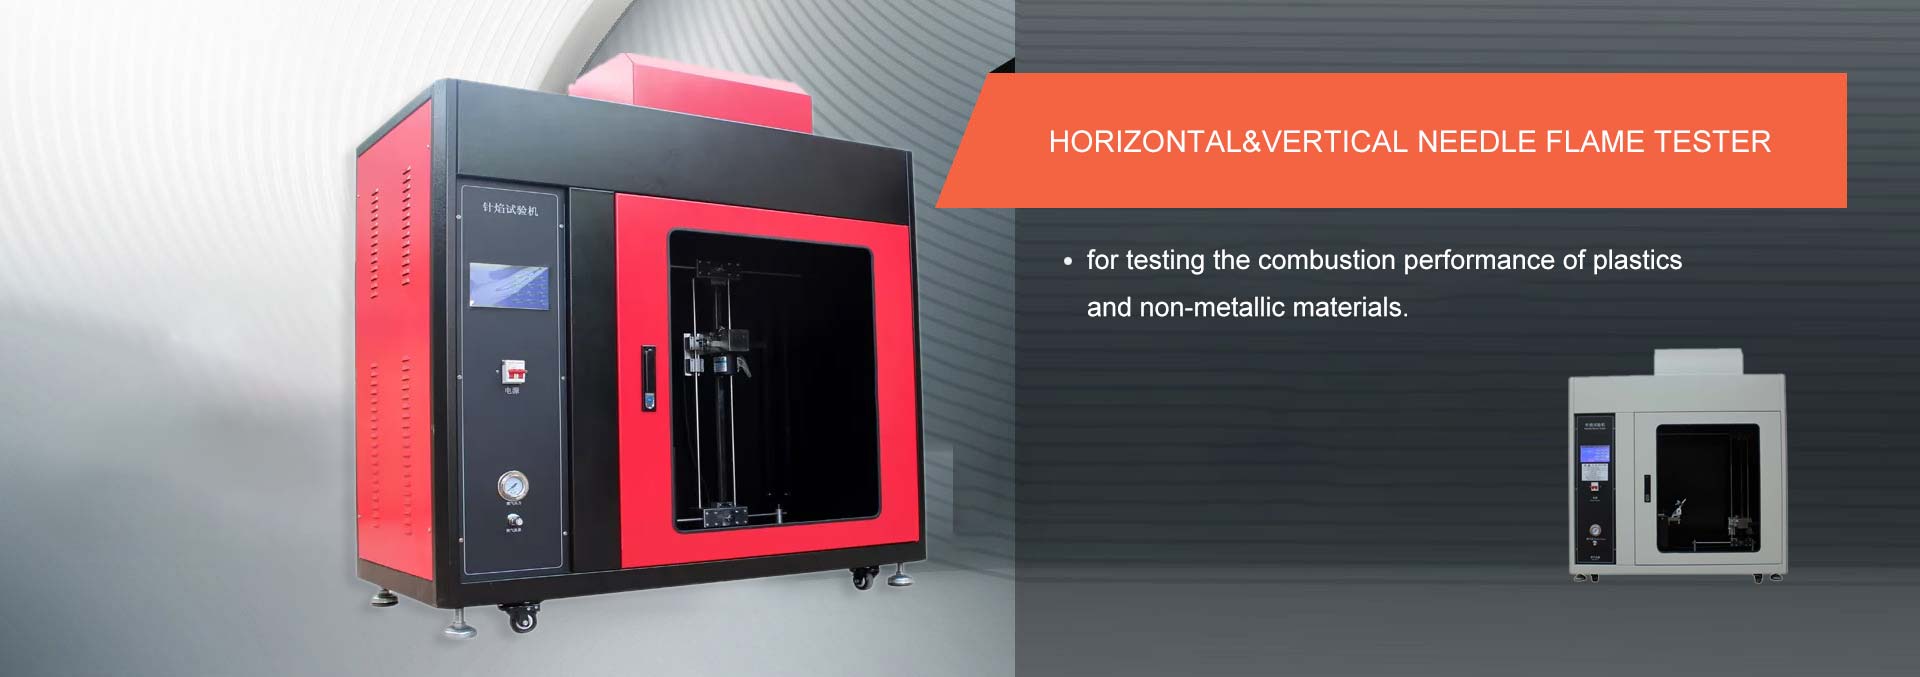 Horizontal&vertical Needle Flame Tester